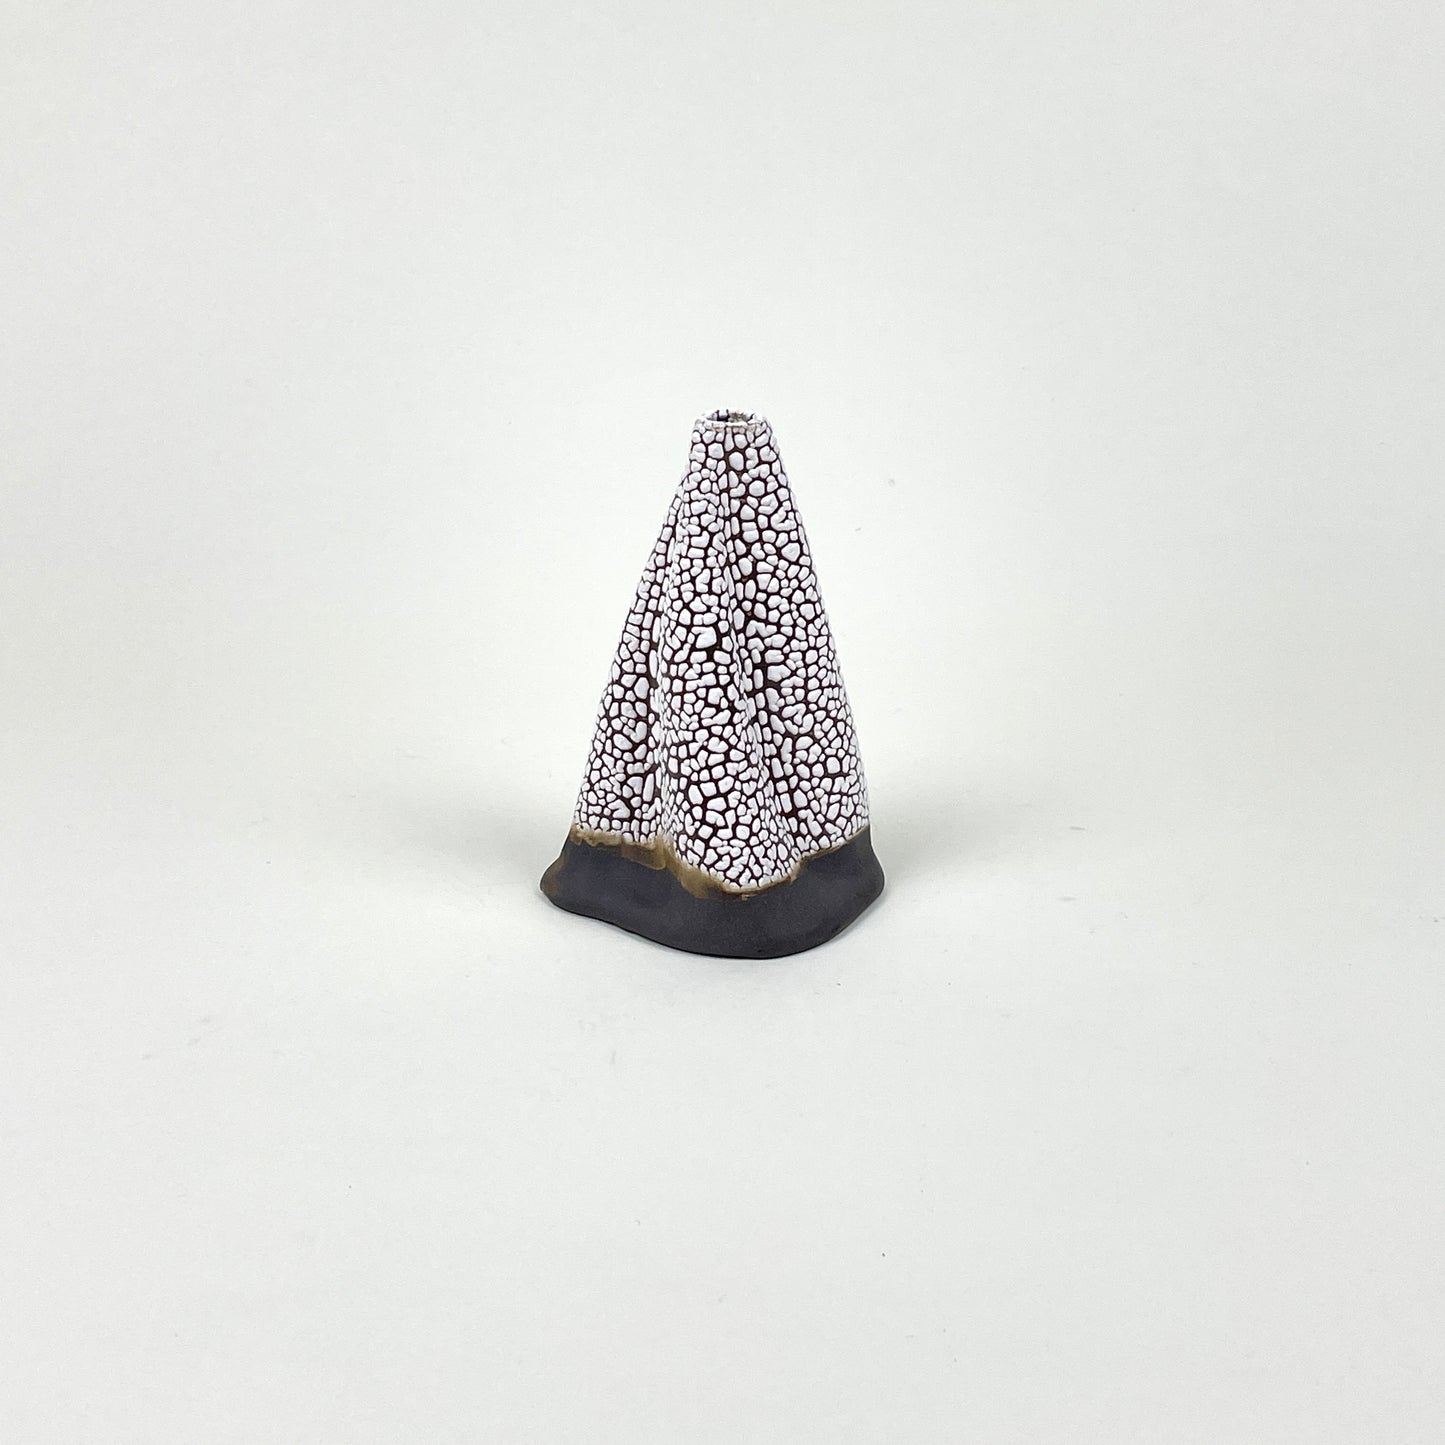 Dark brown and white volcano vase (L) by Astrid Öhman.